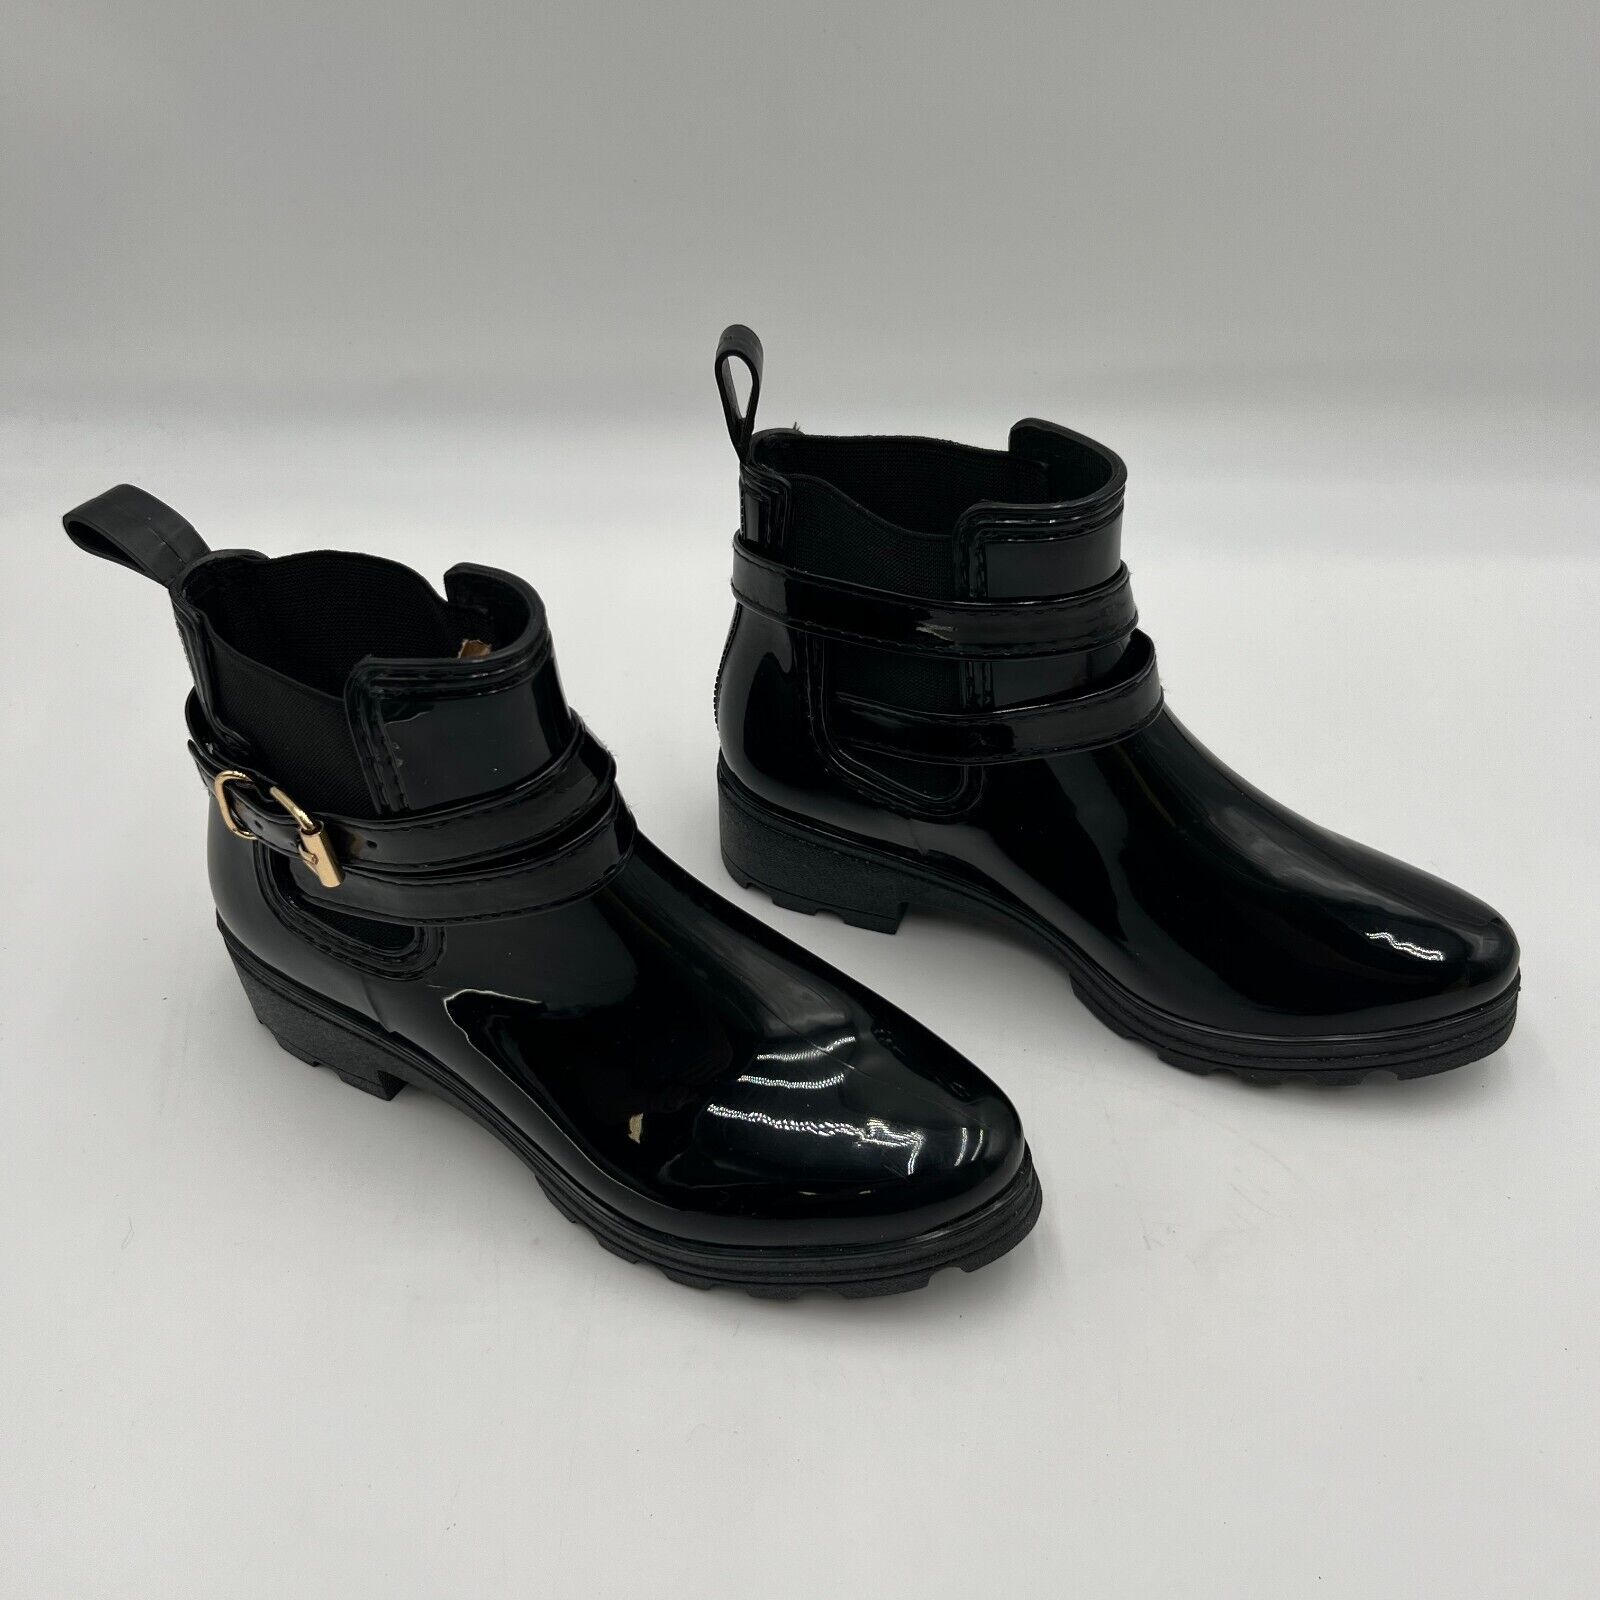 Women’s Rain Boots Waterproof Platform Non-Slip Rubber Ankle Buckle Size 8 XL